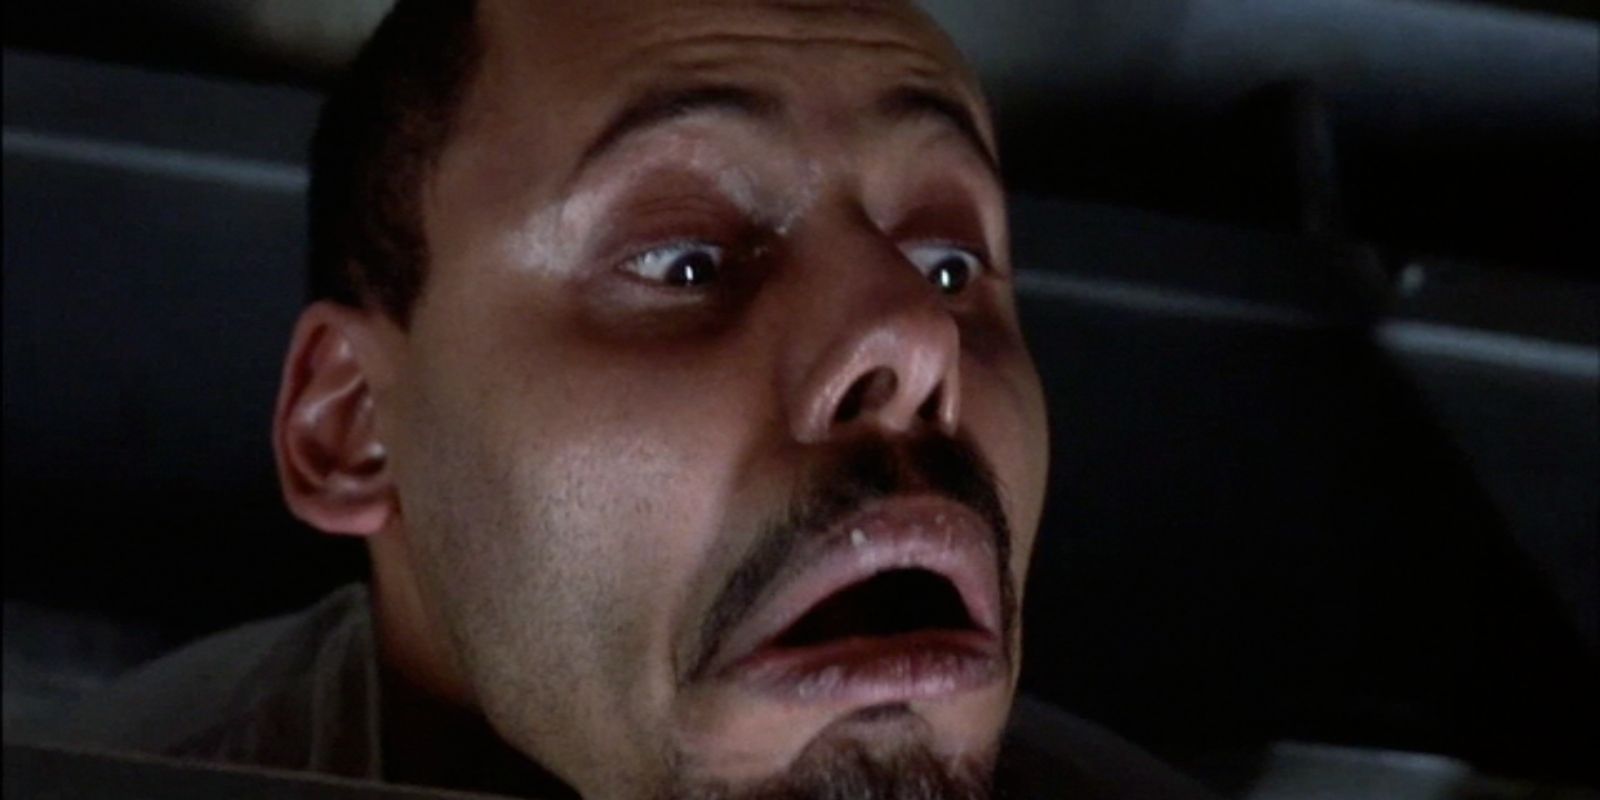     Quentin McNeil ดูหวาดกลัวในภาพยนตร์เรื่อง Cube